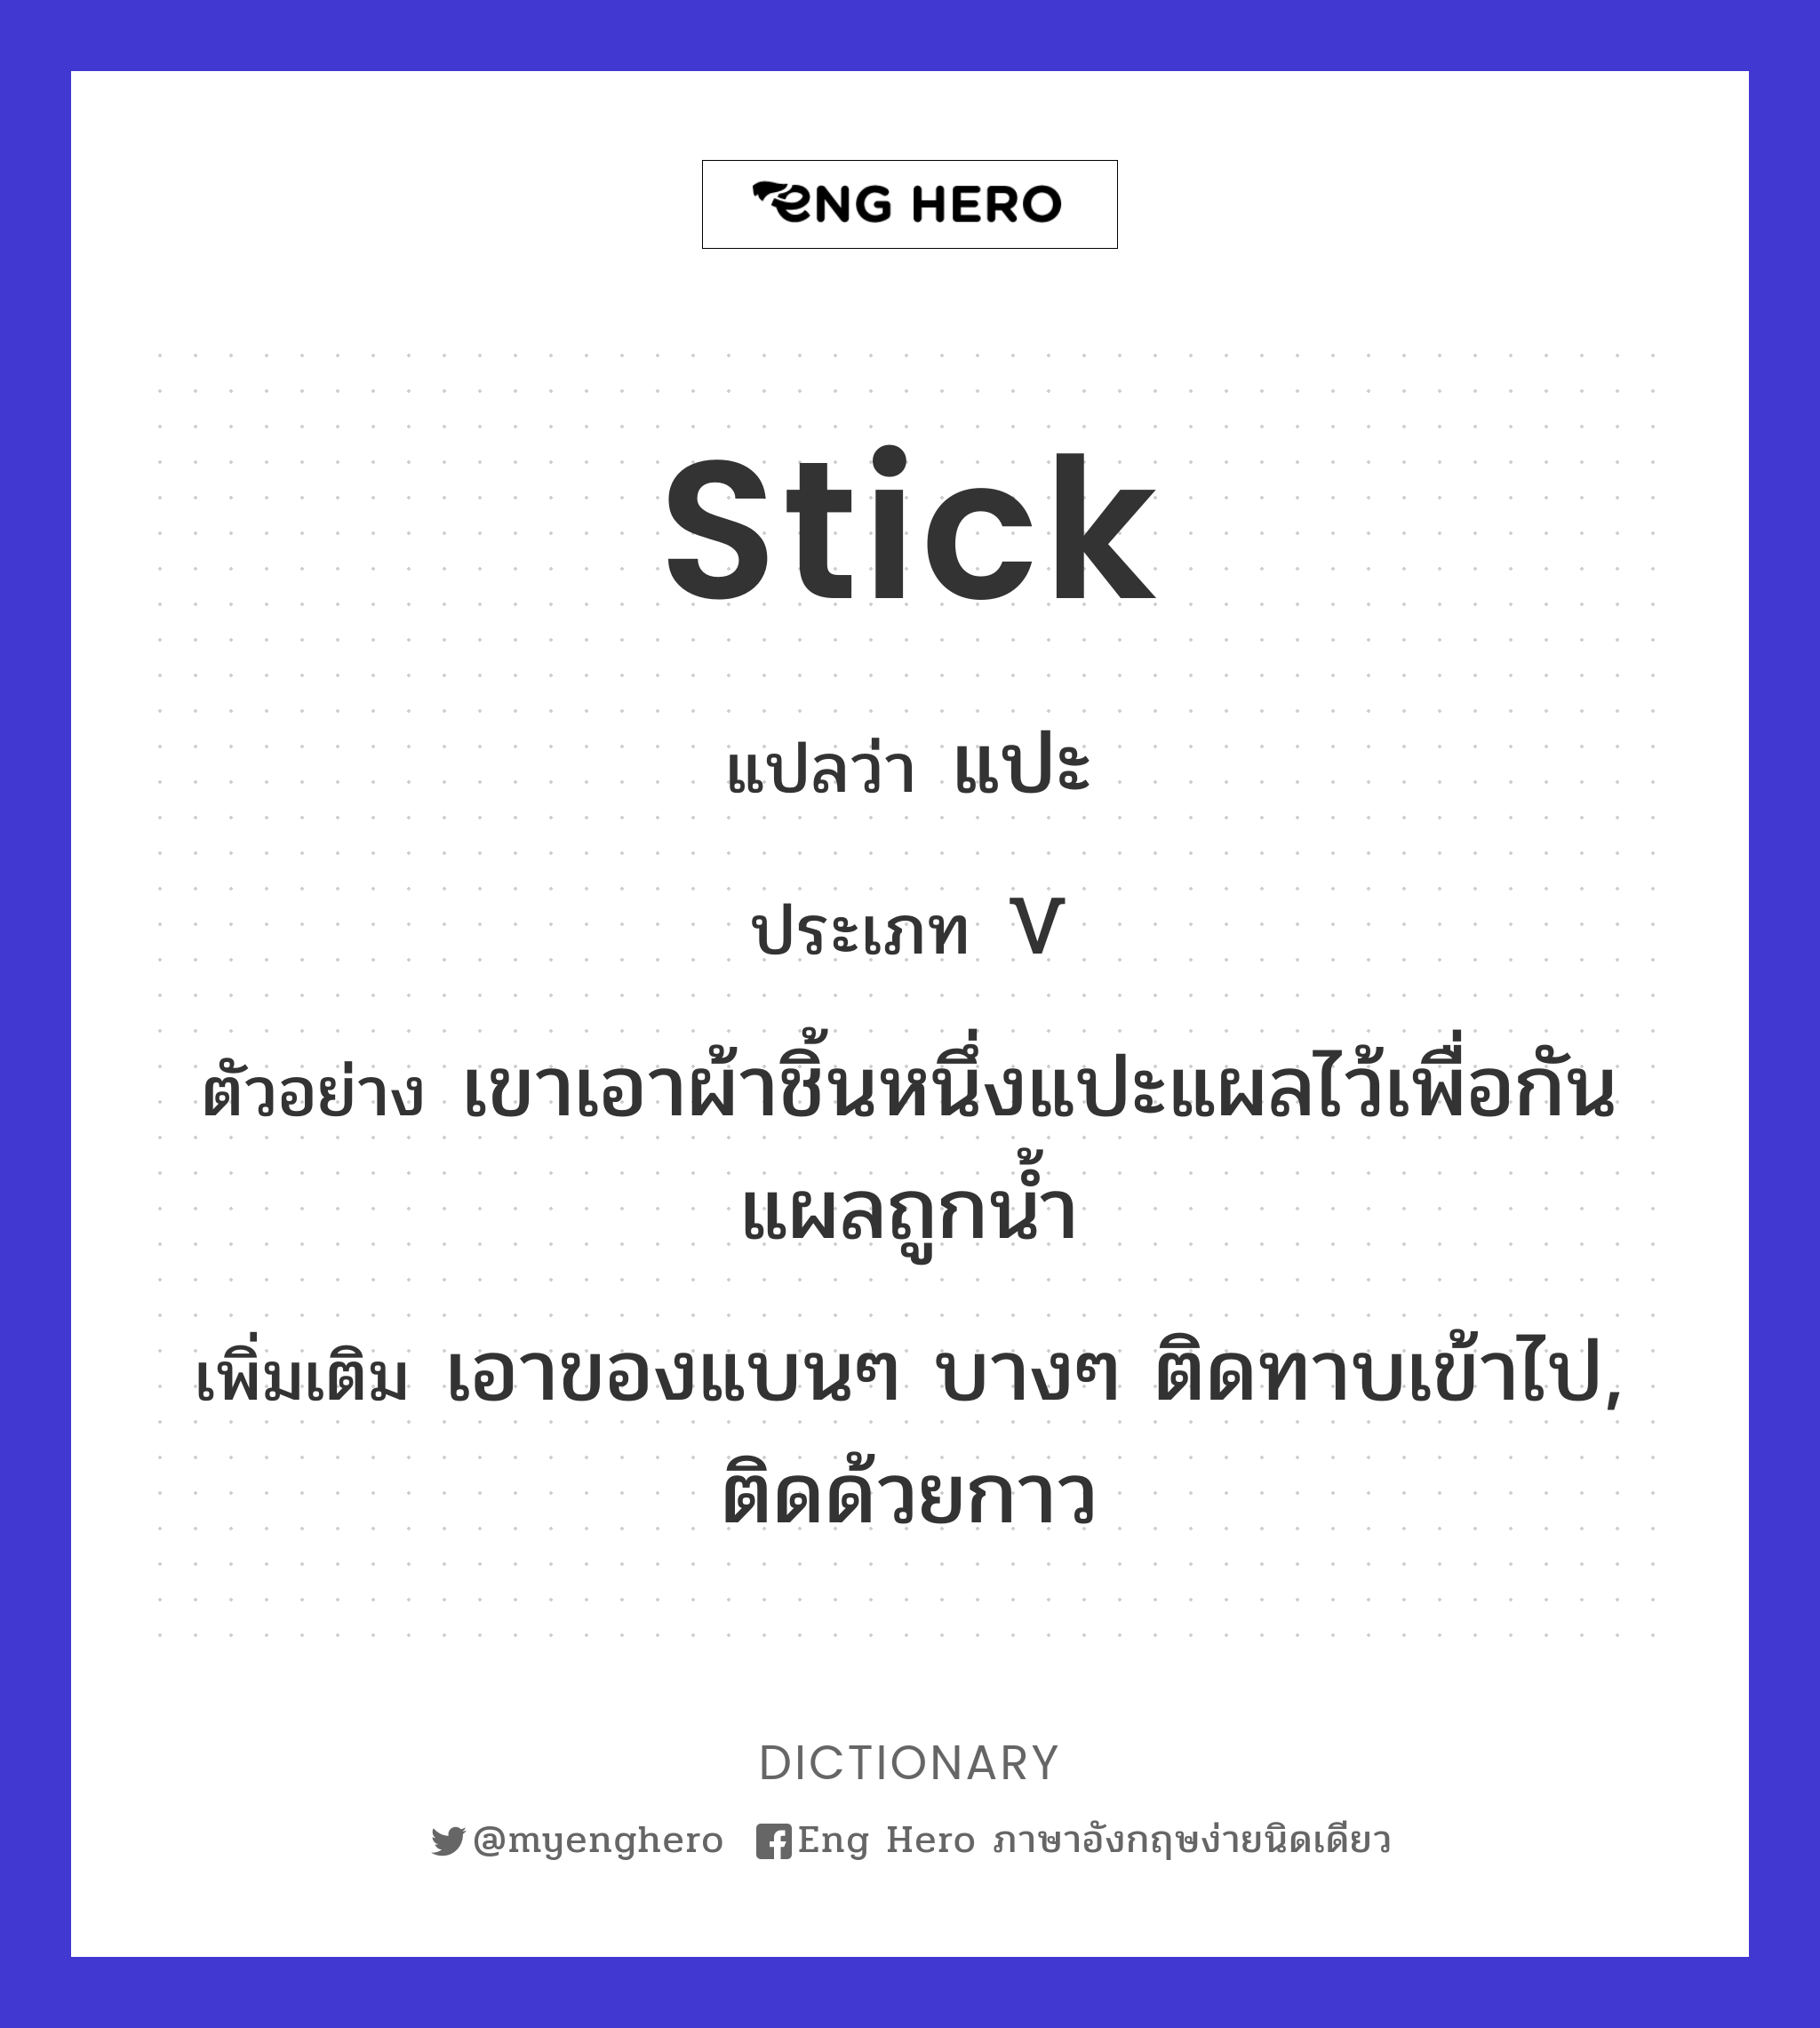 stick